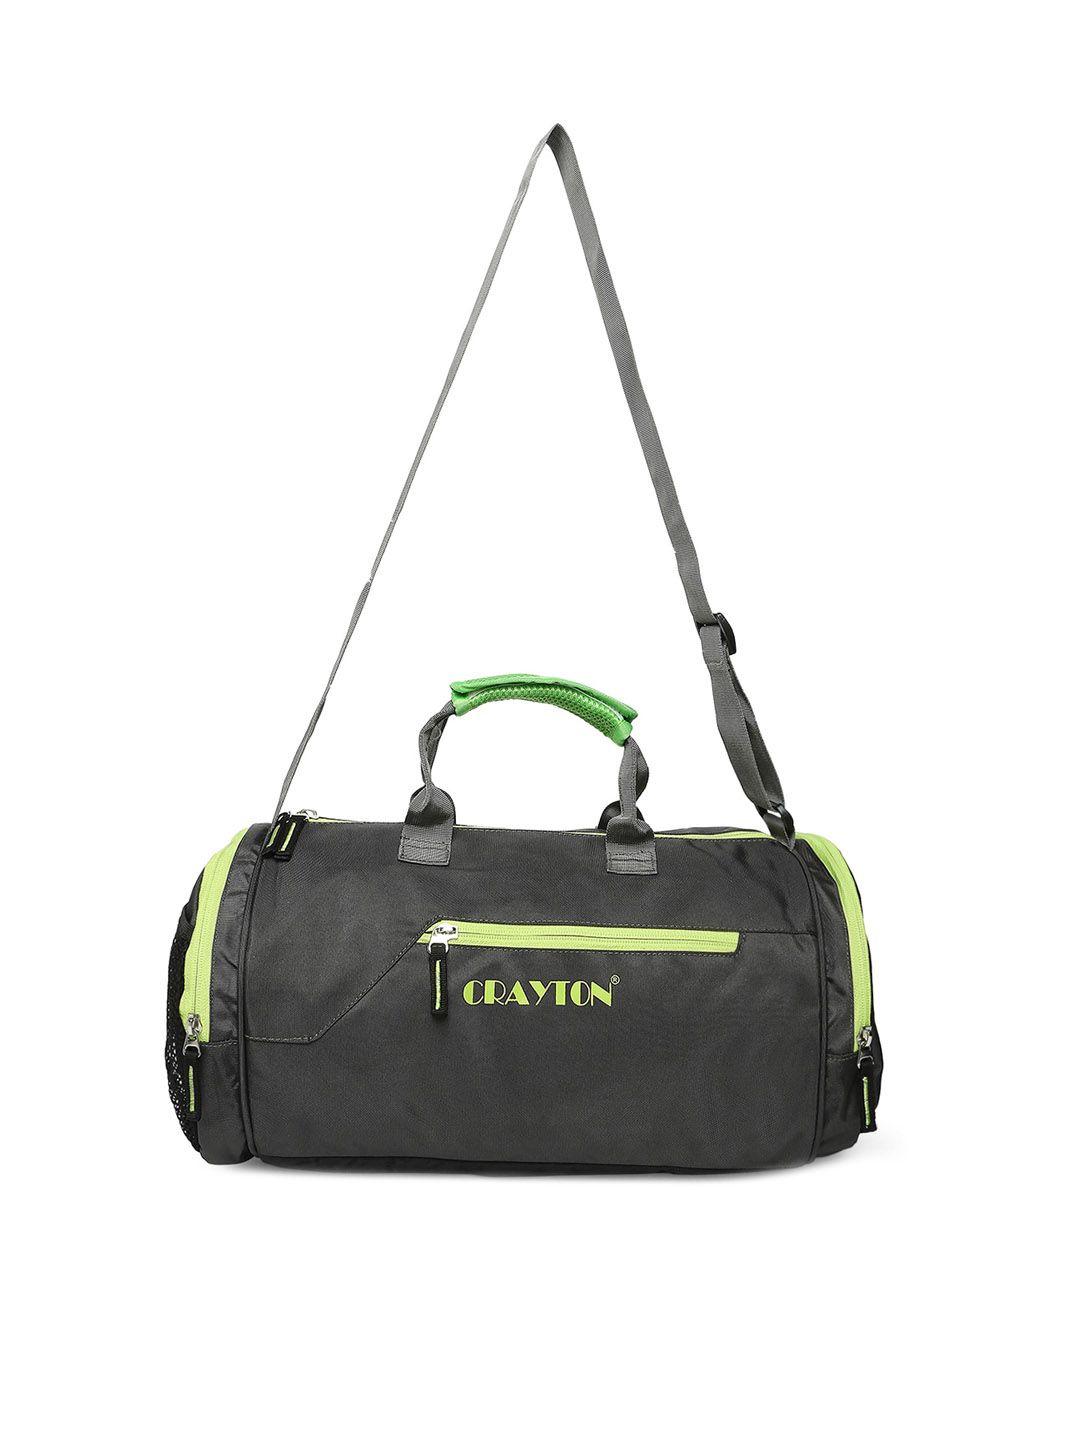 crayton green and black solid duffel bag